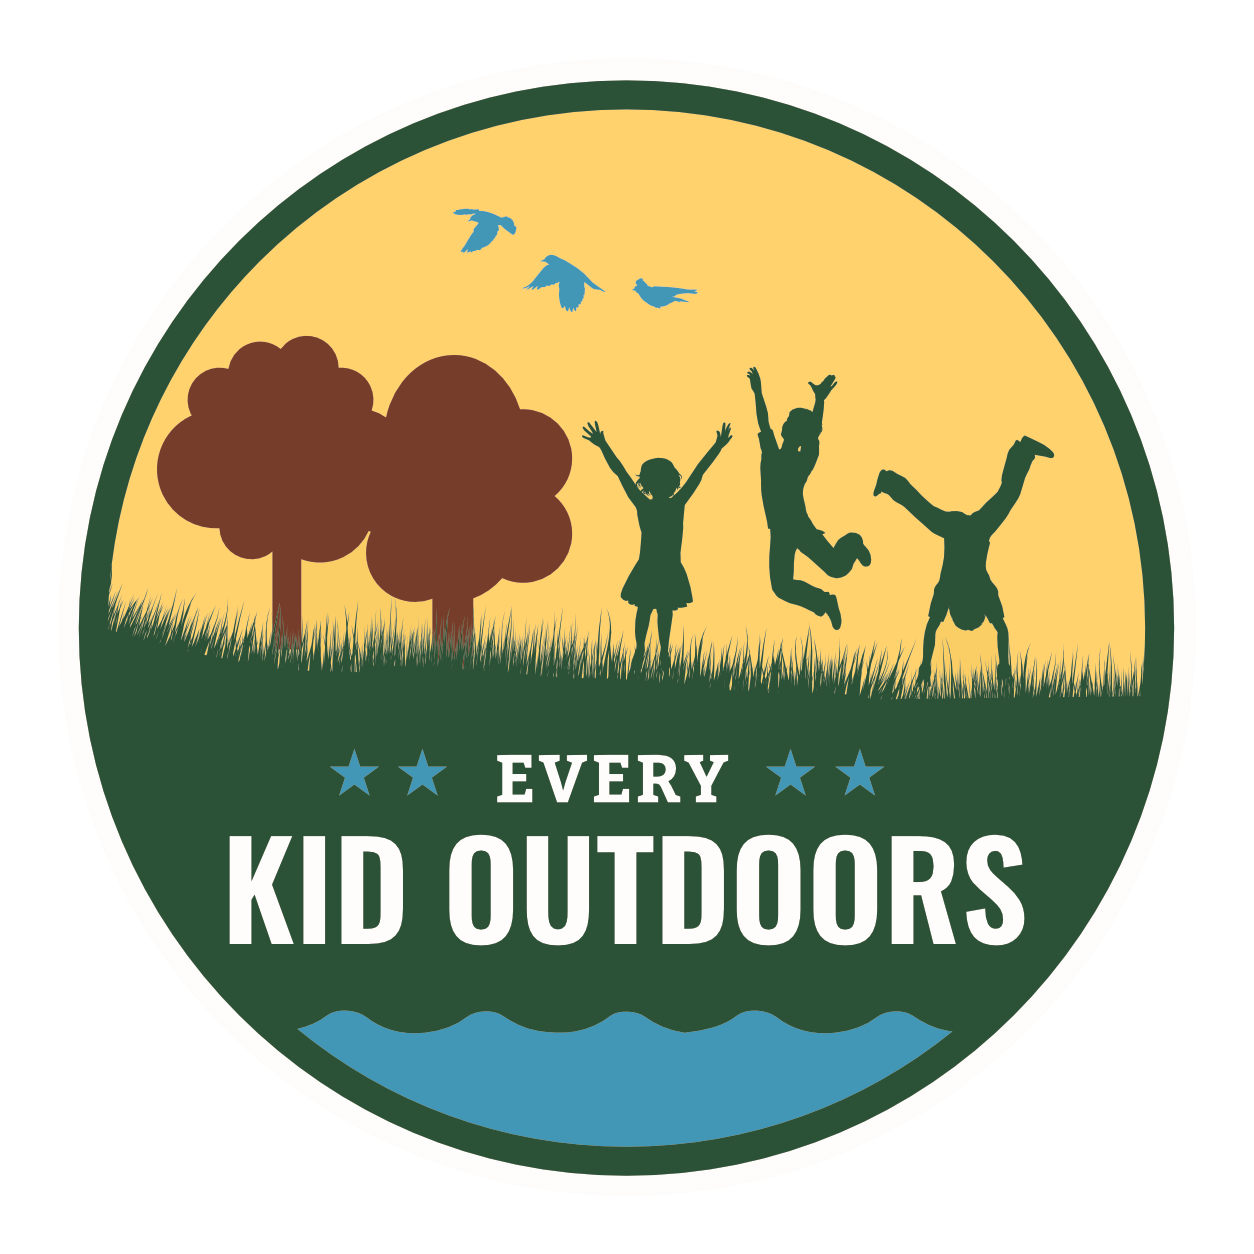 Every kid outdoors program logo